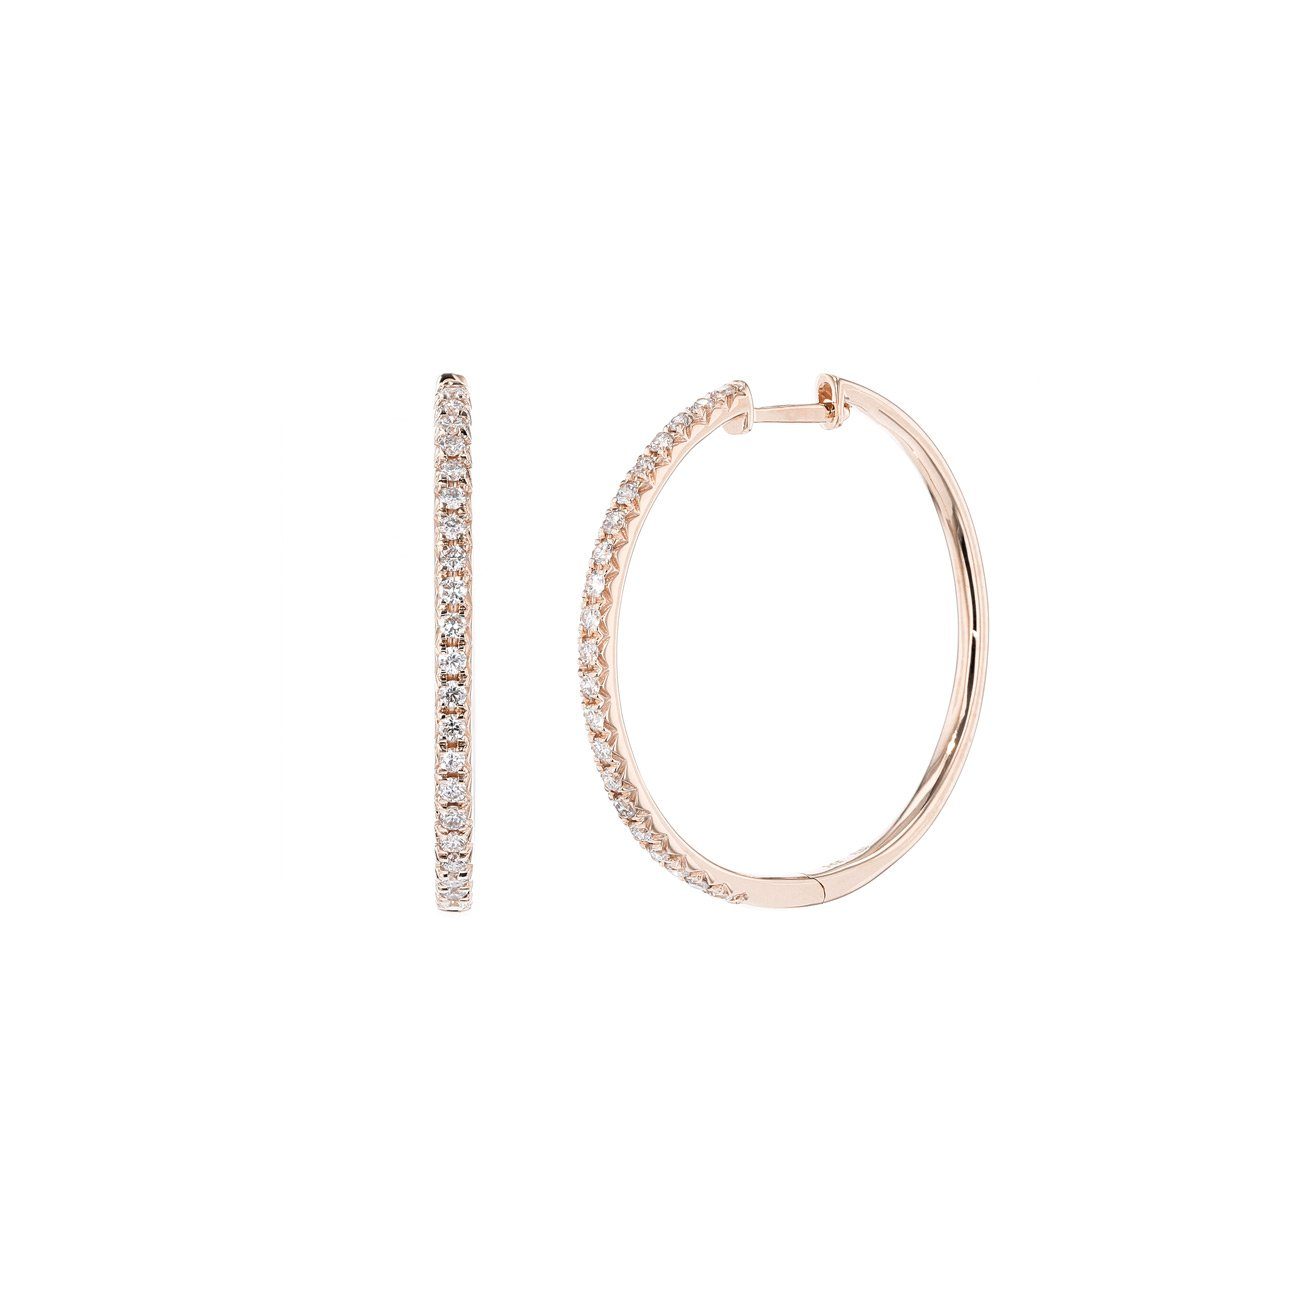 Large Pavé Diamond Hoops Fine Jewelry Earrings Princess Bride Diamonds 14K Rose Gold 